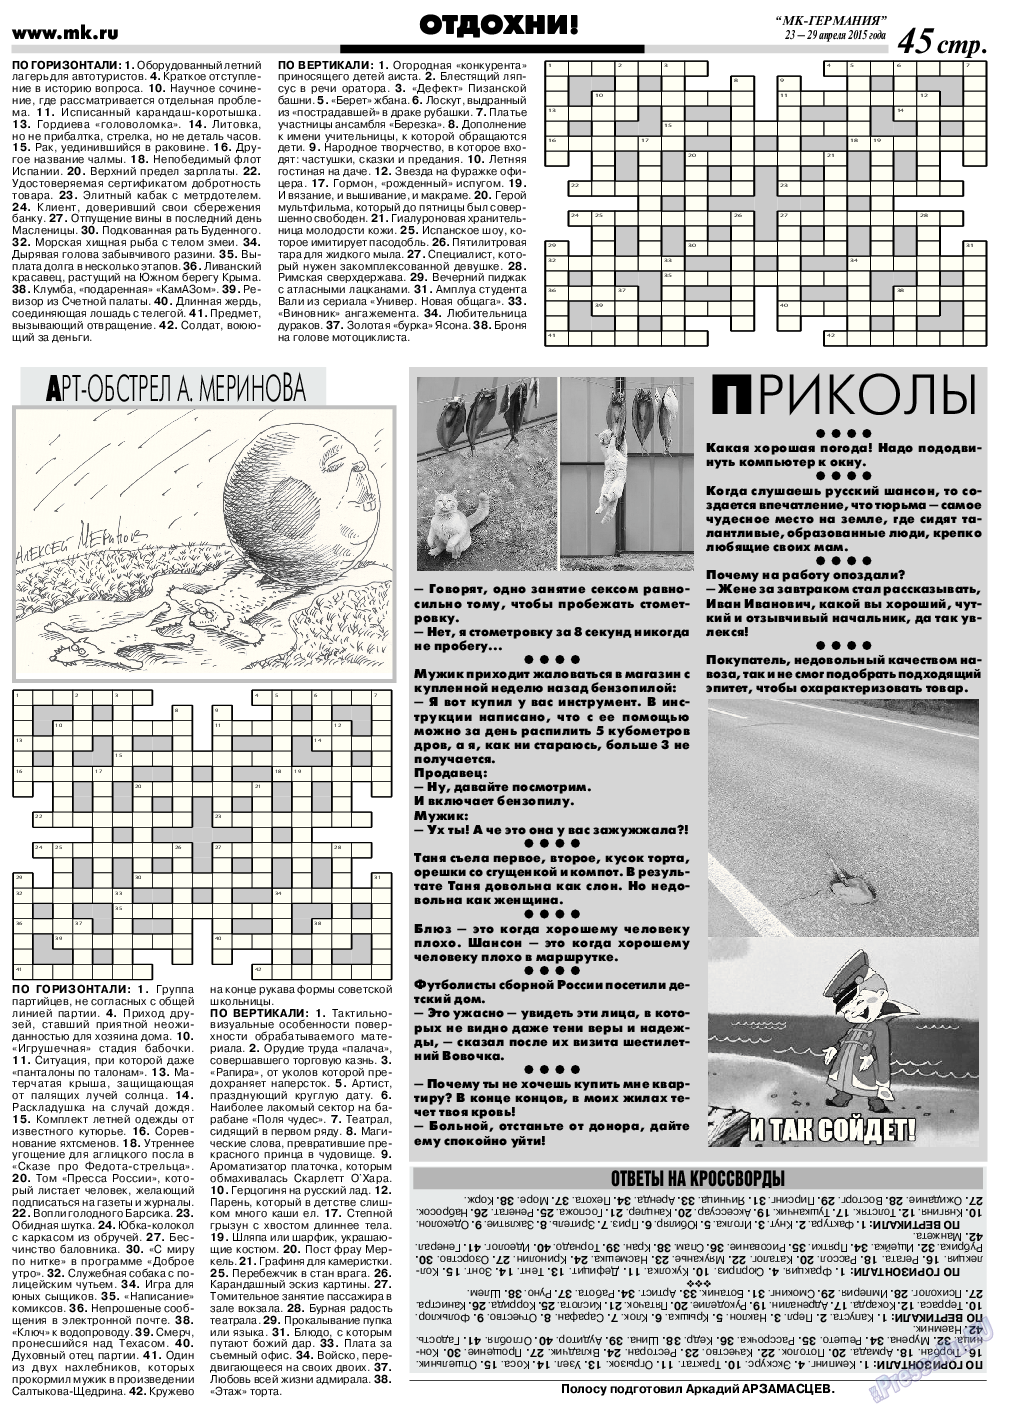 МК-Германия, газета. 2015 №17 стр.45